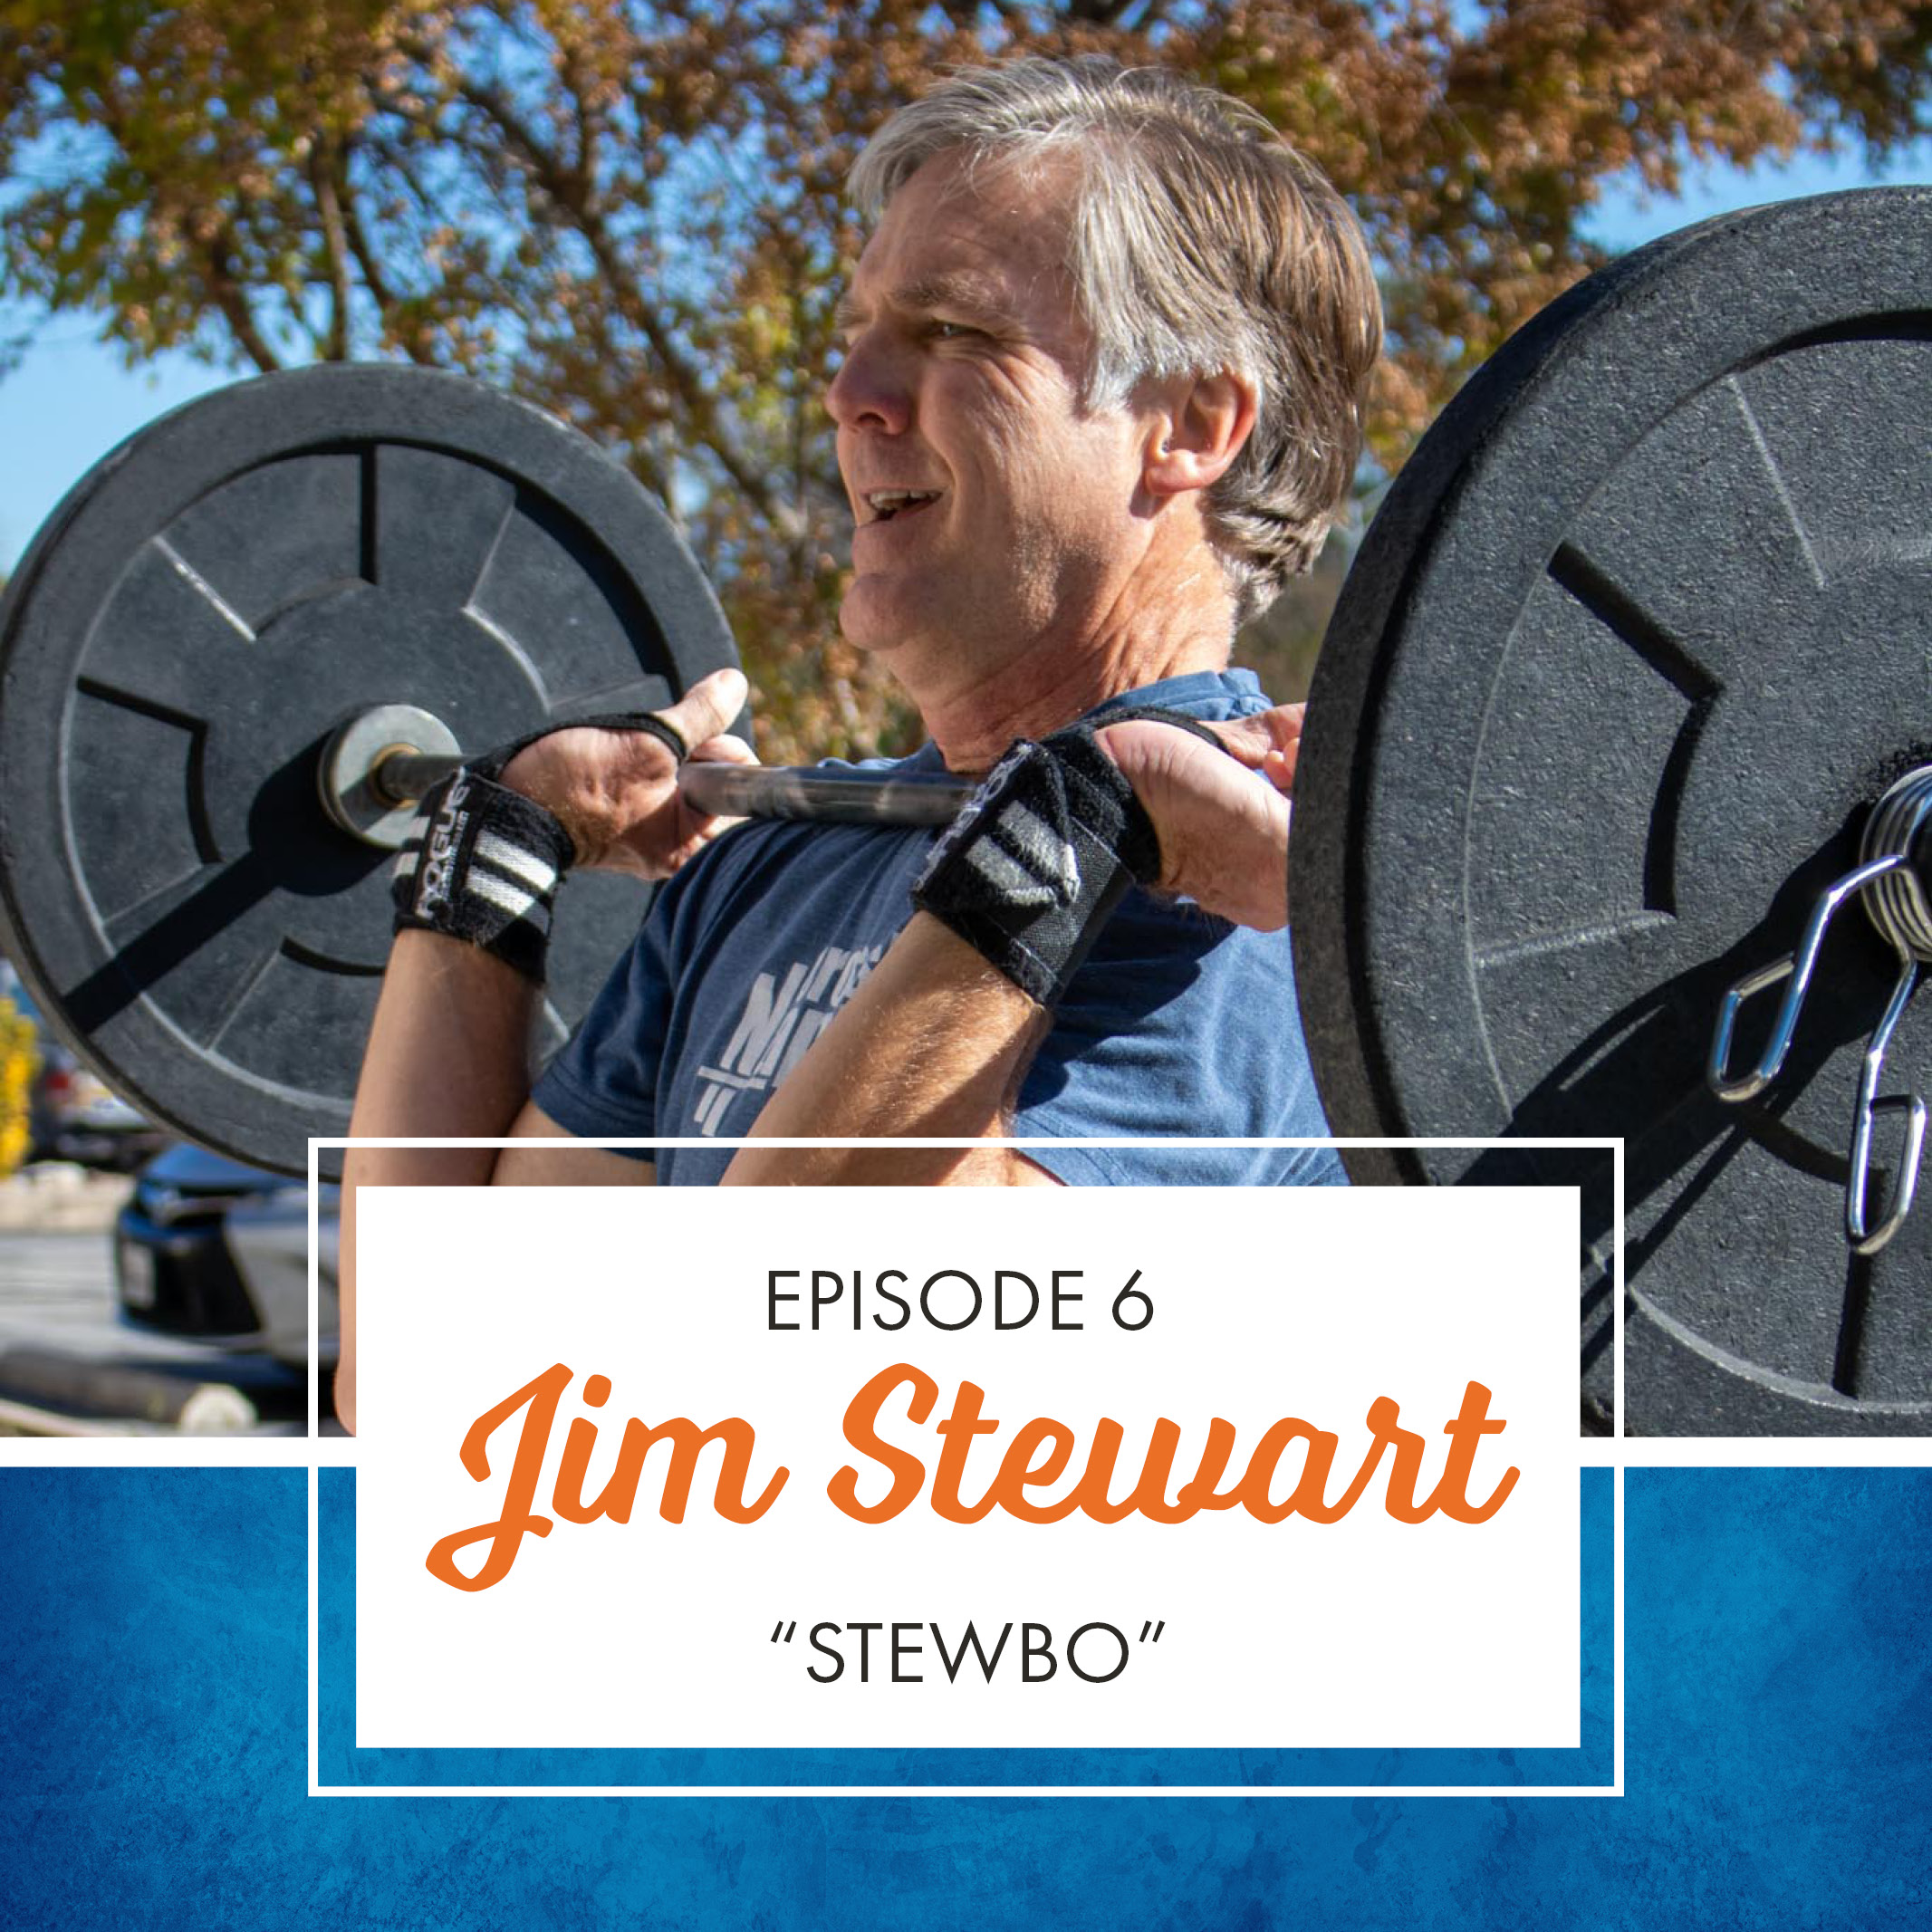 Jim Stewart